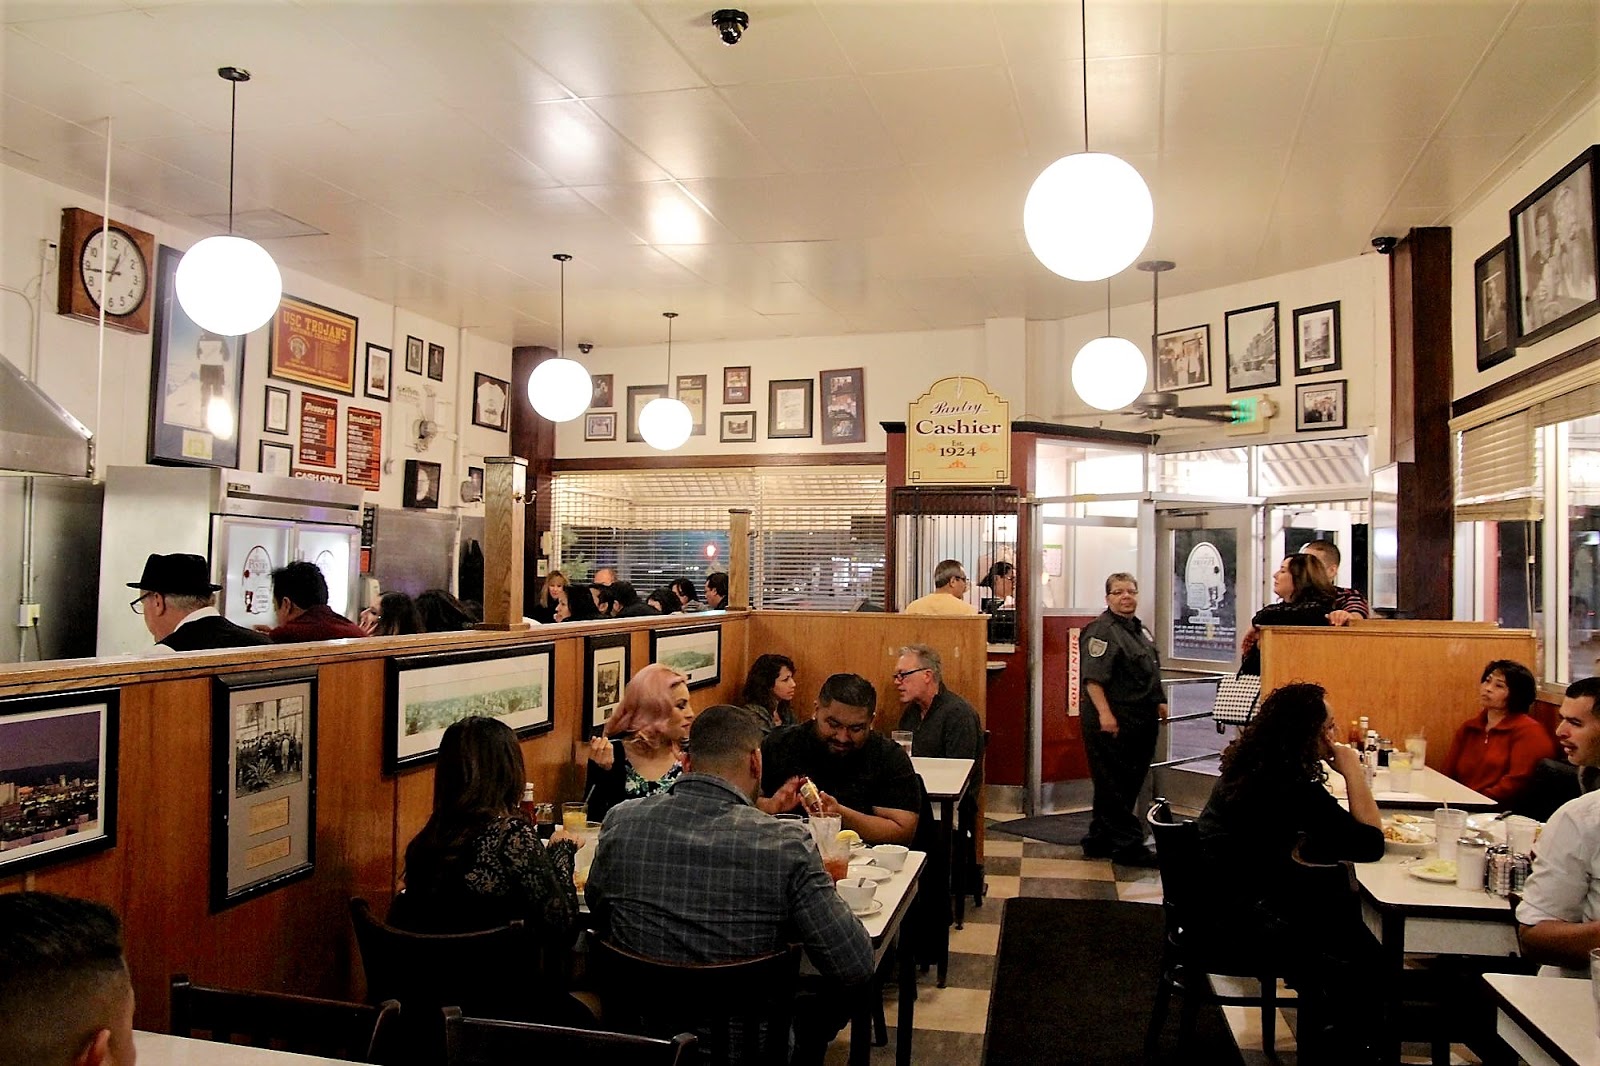 Member The Original Pantry Cafe in Los Angeles CA